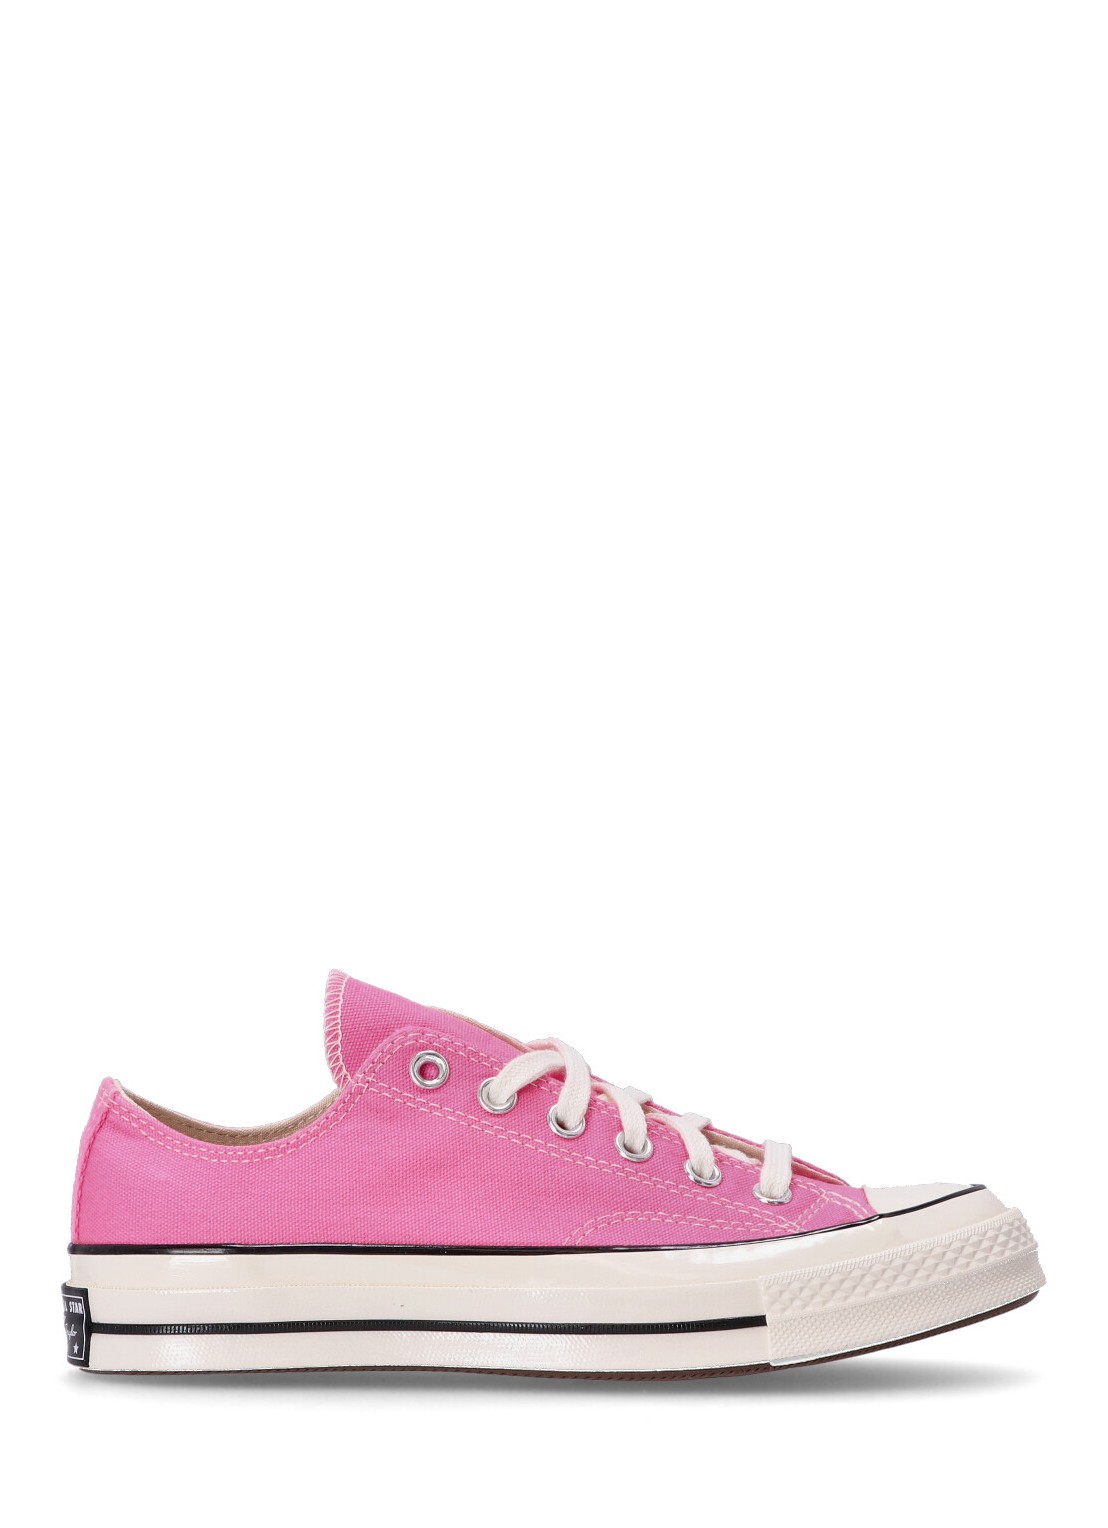 Sneaker converse sneaker woman chuck 70 a08138c pink egret black talla 37
 